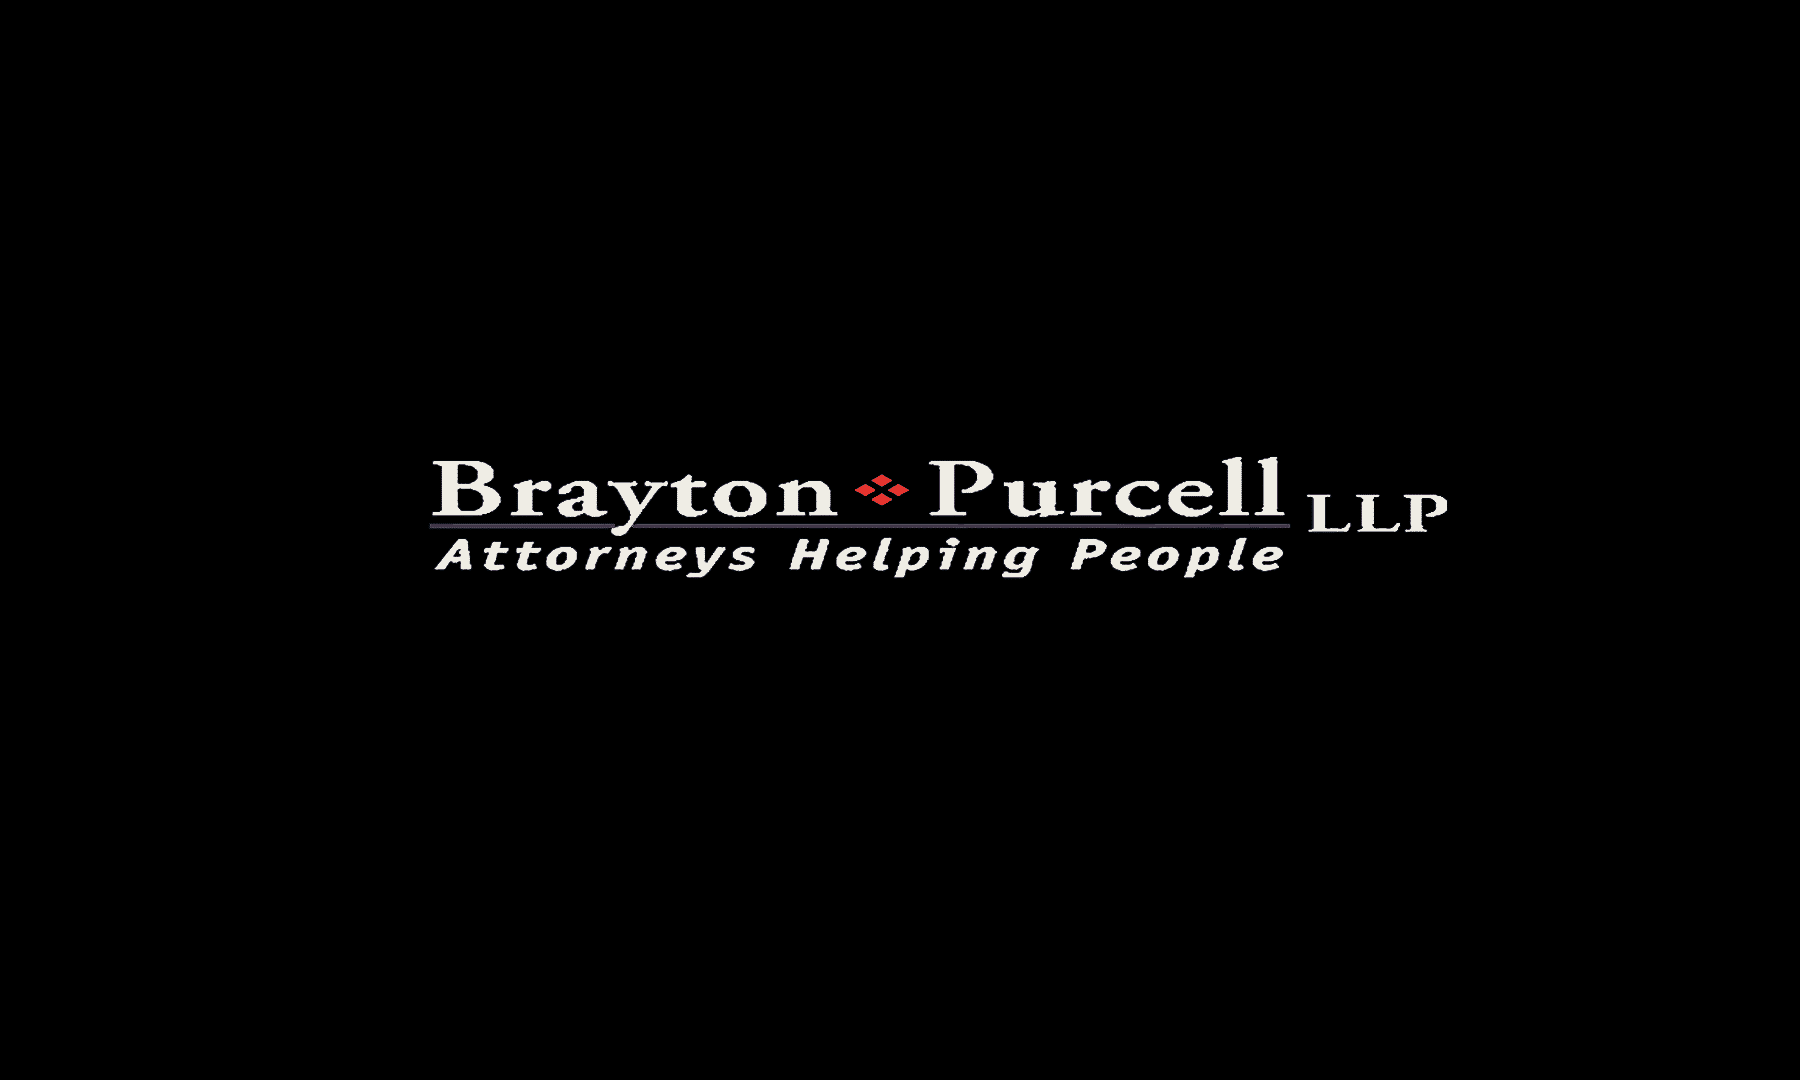 Brayton Purcell